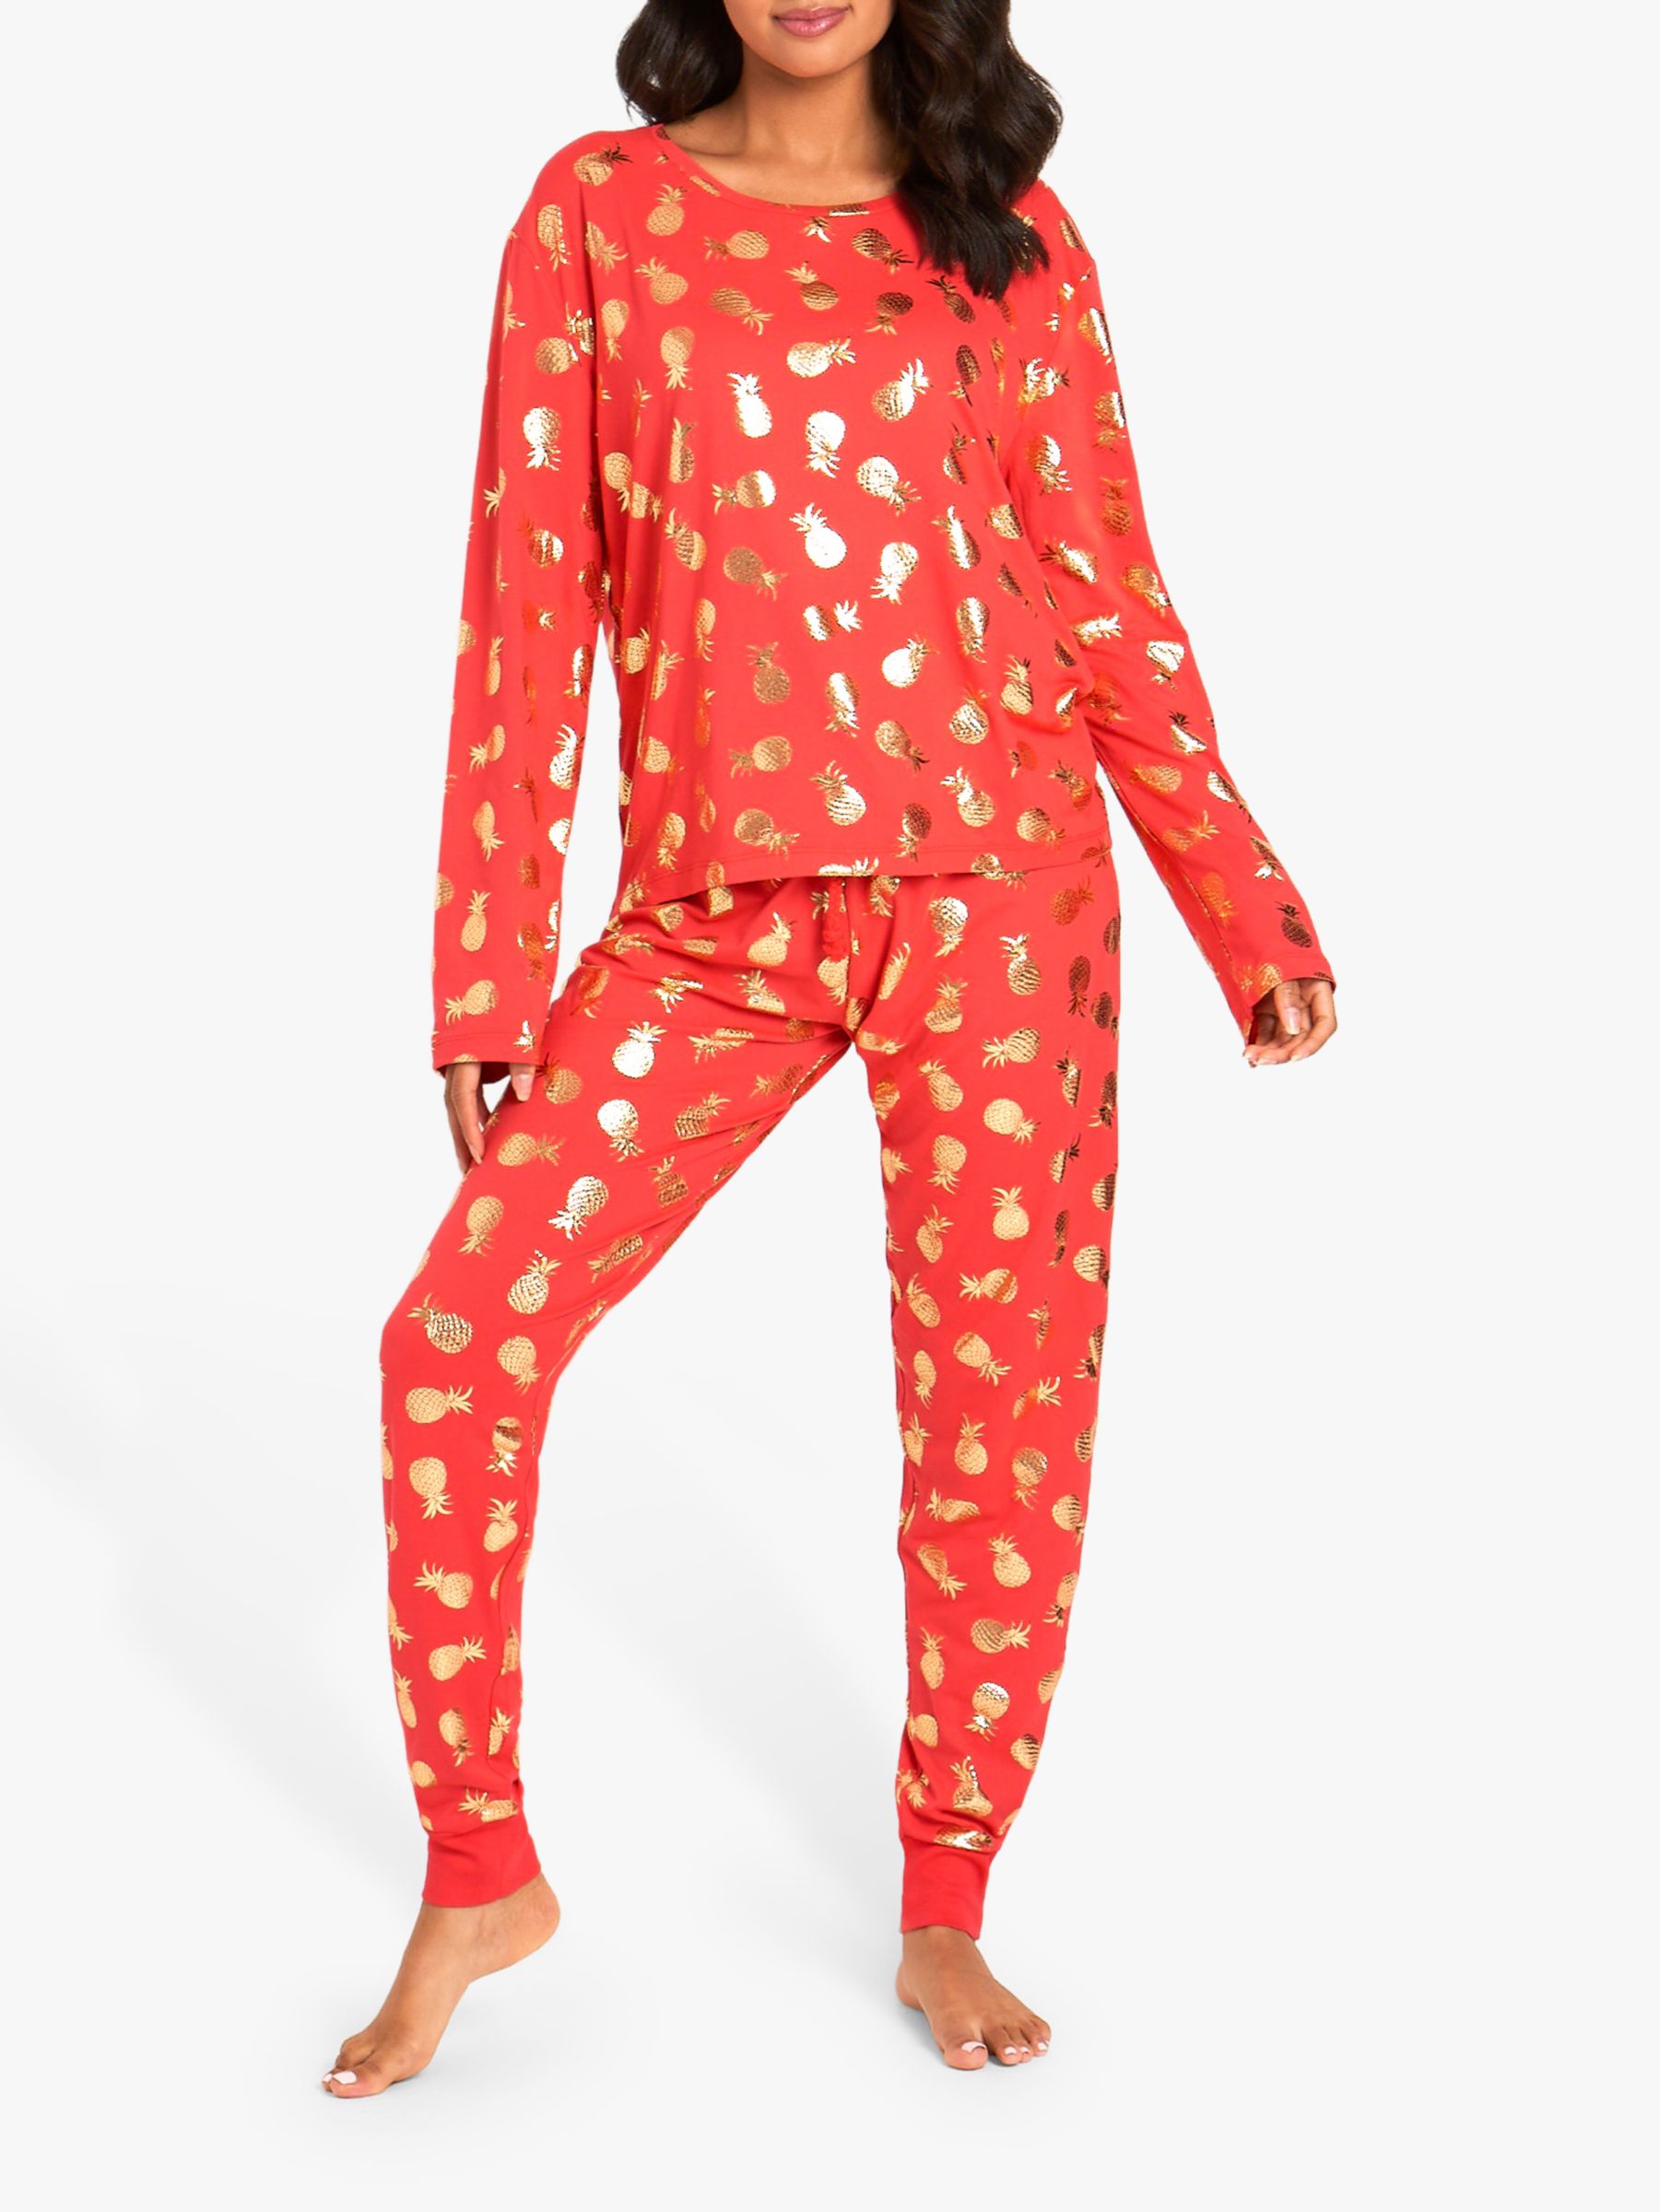 Chelsea Peers Pineapple Print Pyjama Set Red Gold At John Lewis Partners